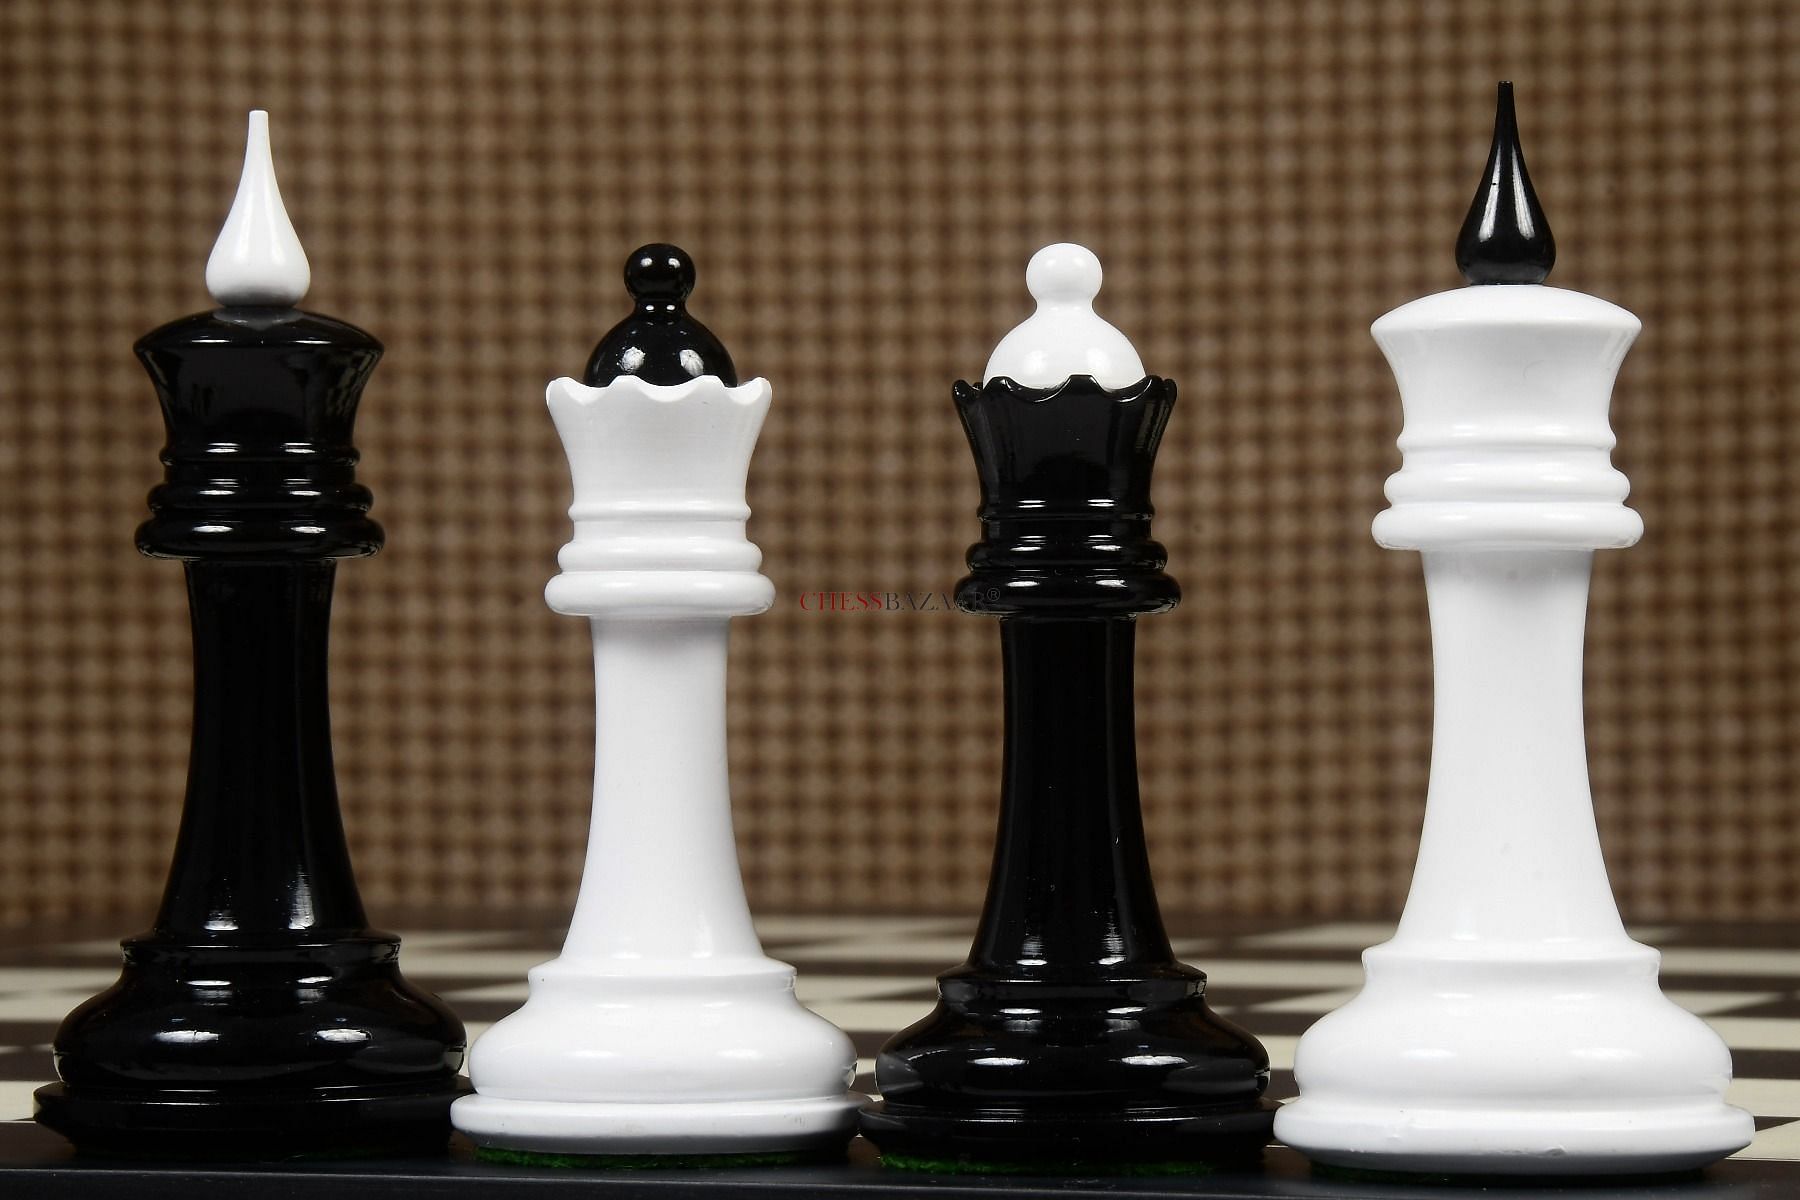 Buy Reproduced 1940 Soviet Club Chess Set in Ebony & Ivory White - 4” King